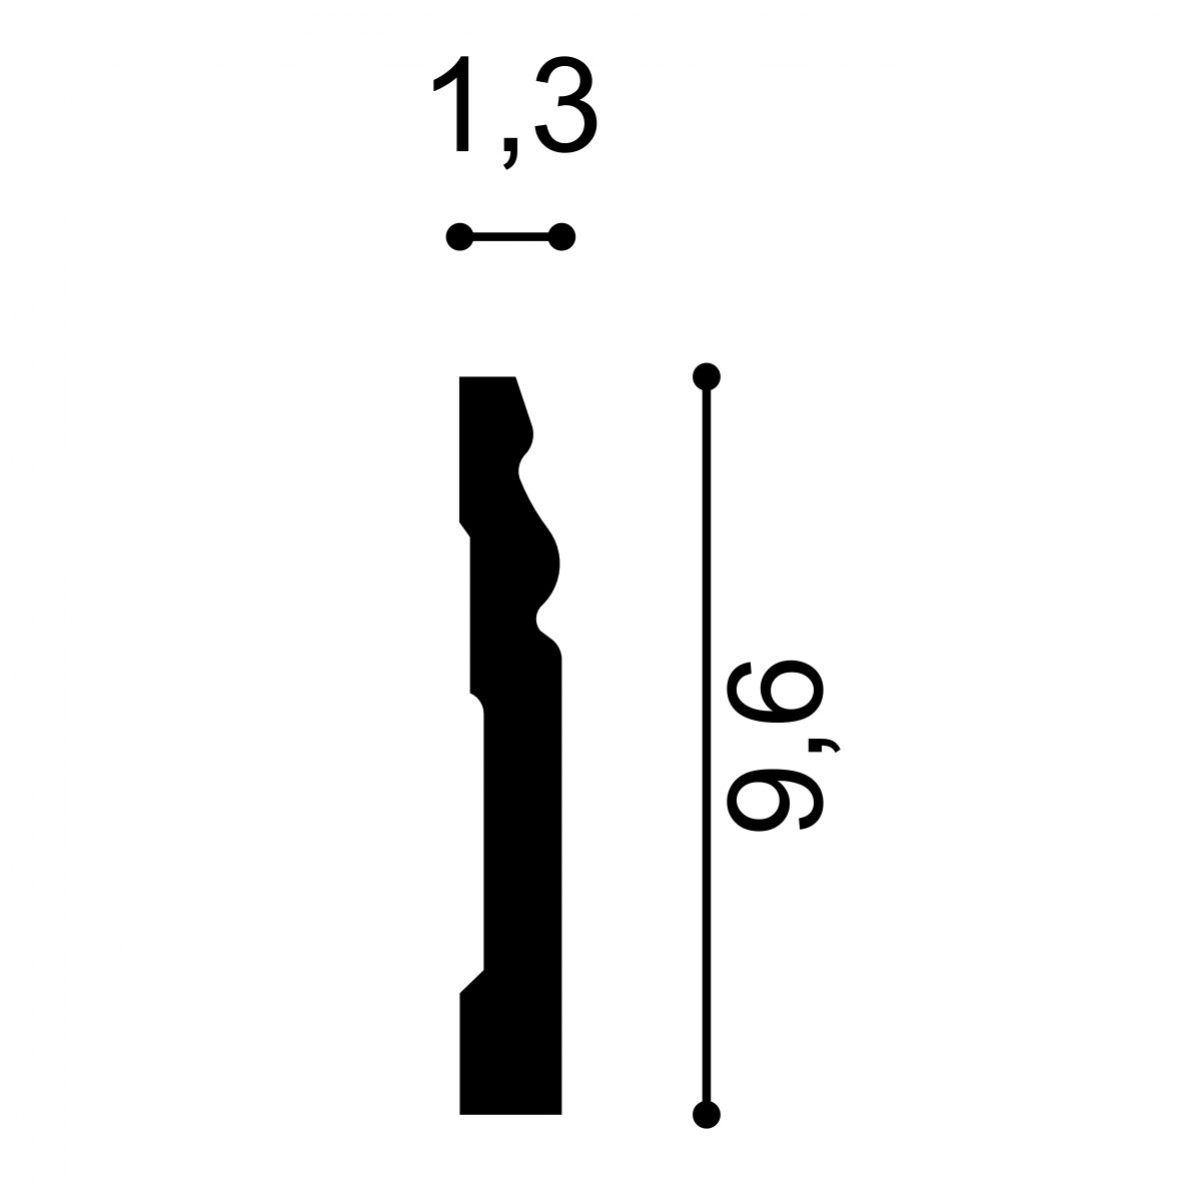 Plinta S6, Dimensiuni: 200 X 9.6 X 1.3 cm, Plinte decorative 